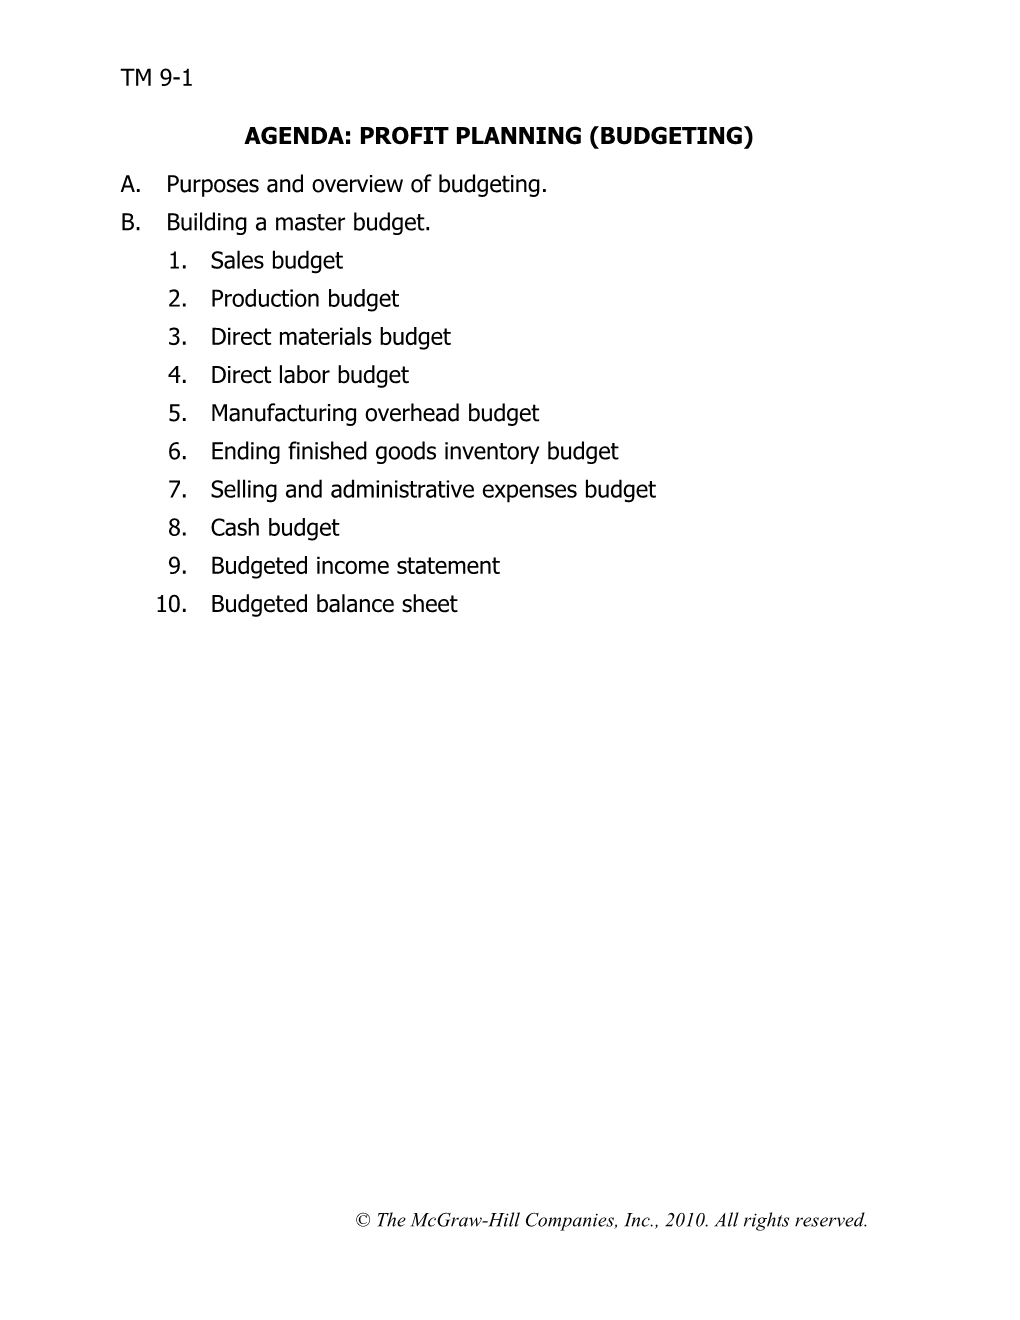 Agenda: Profit Planning (Budgeting)